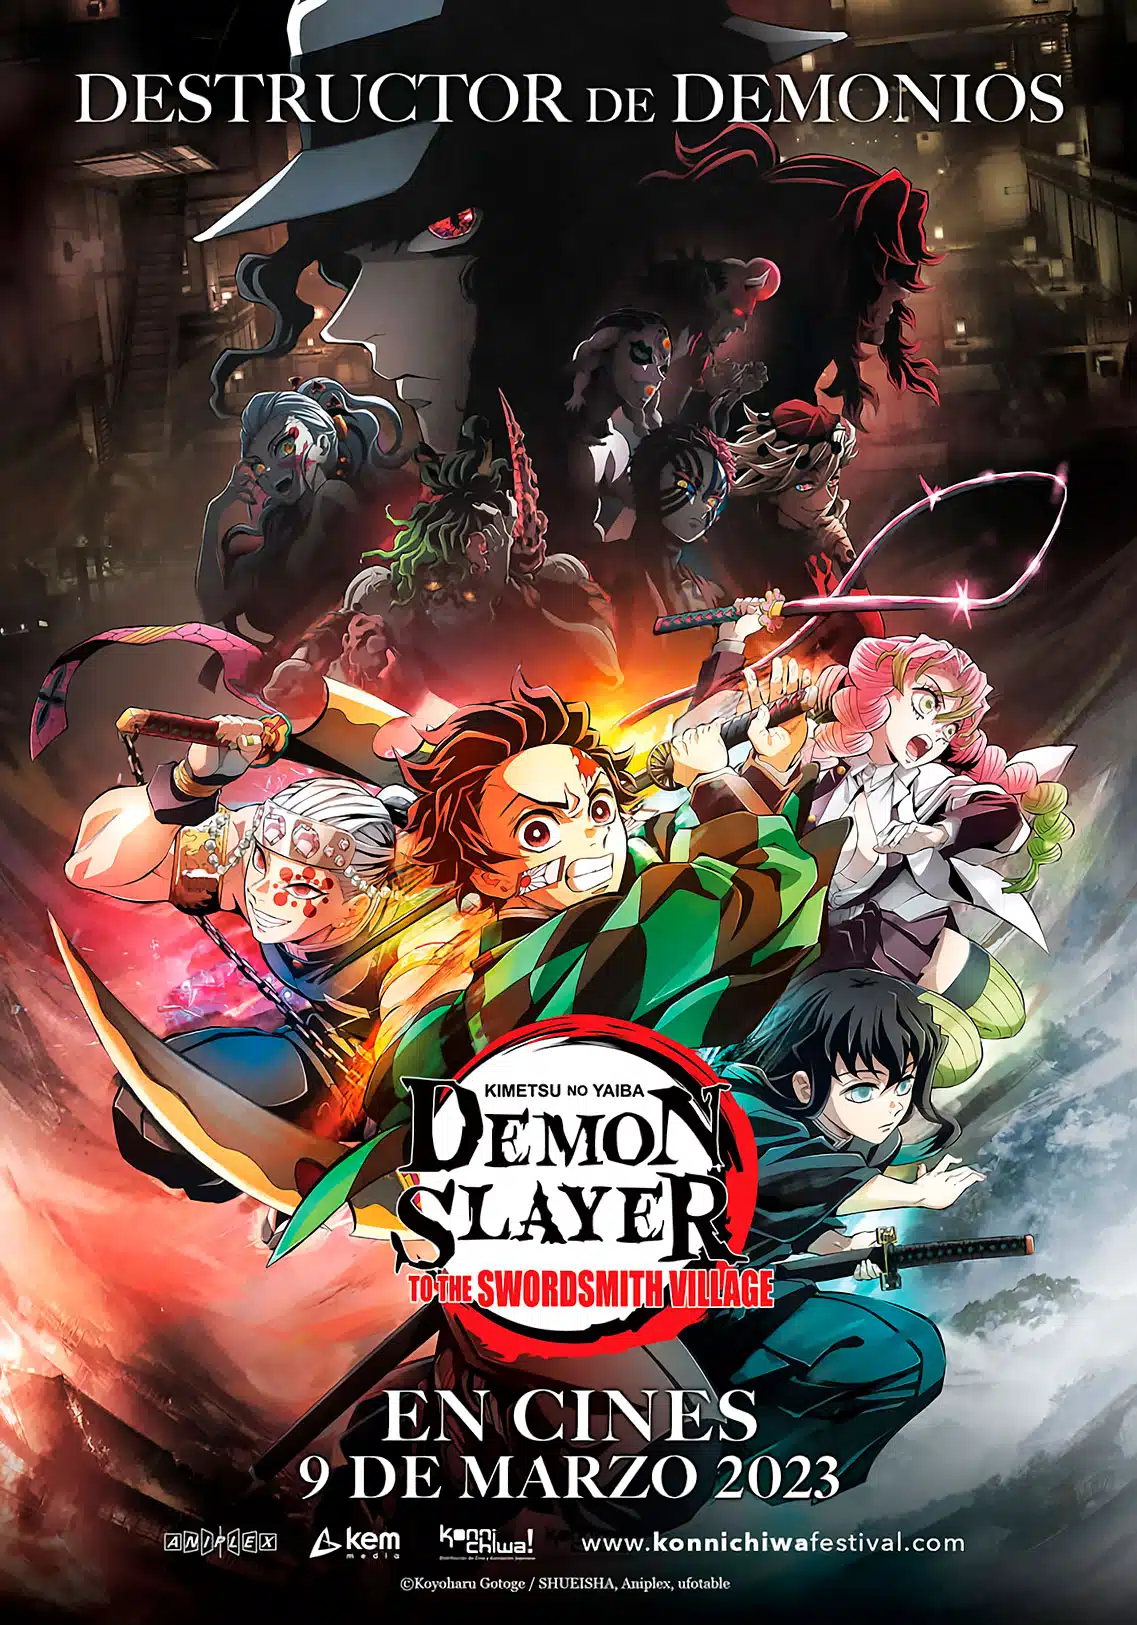 Demon Slayer Kimetsu no Yaiba To the Swordsmith Village visual